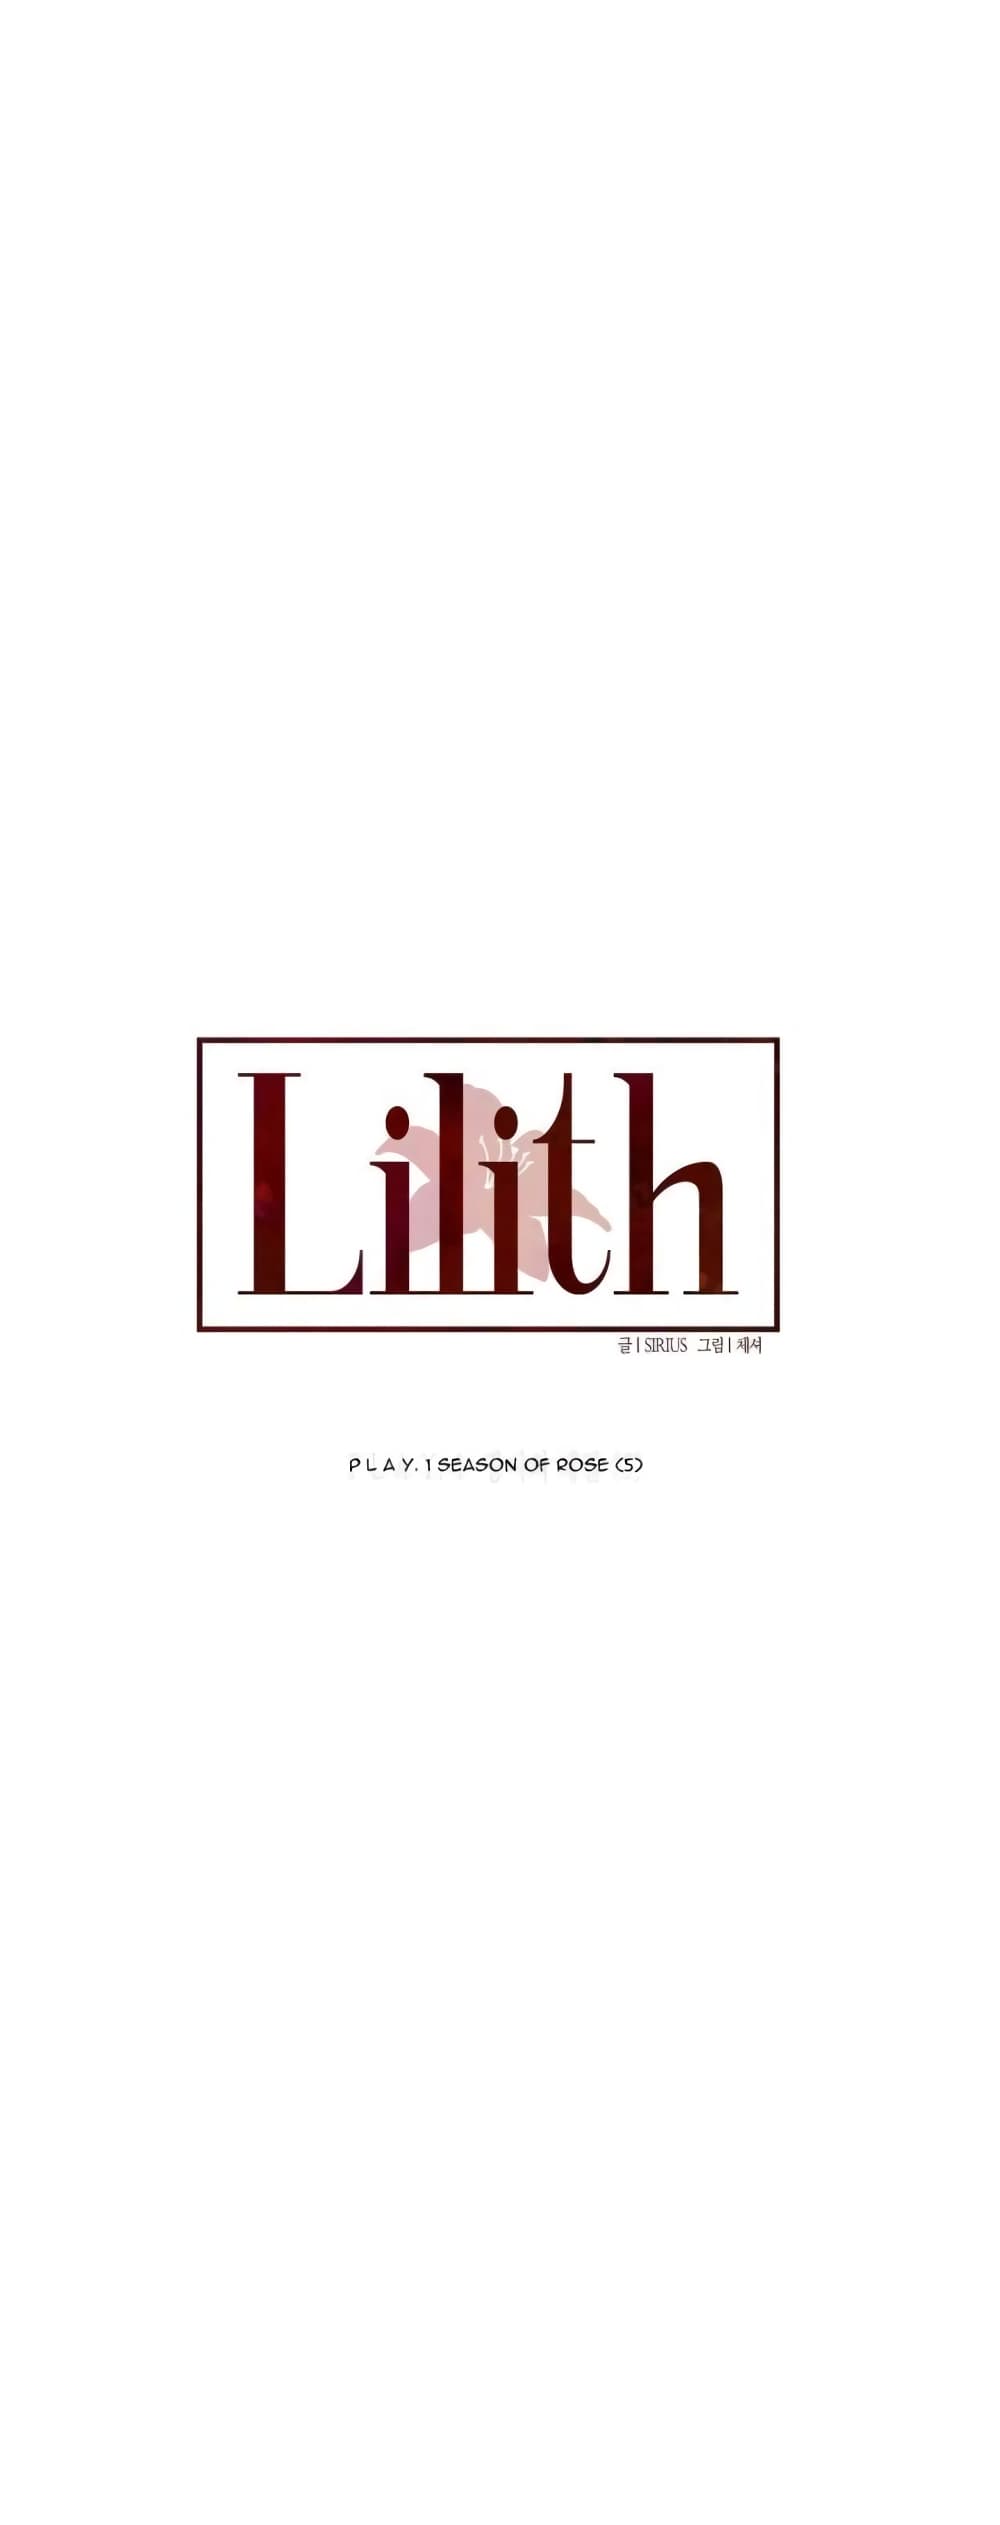 Lilith ตอนที่ 5 (1)